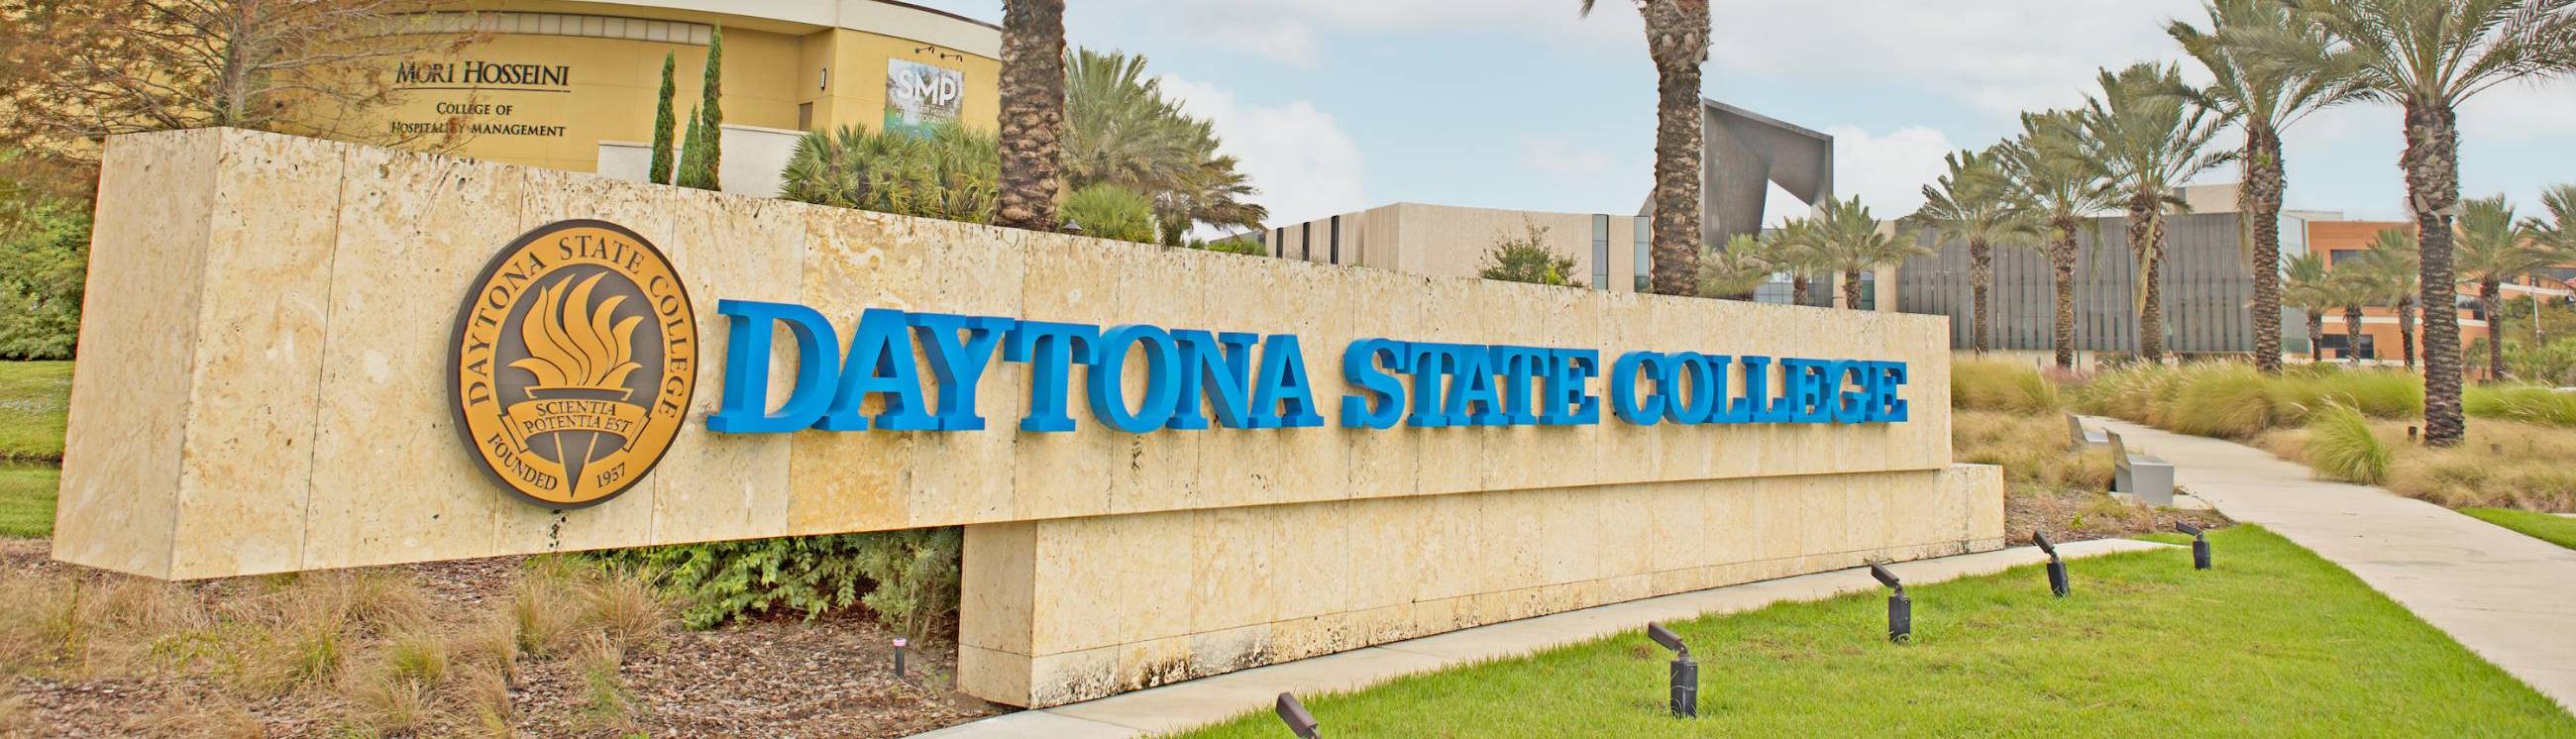 DSC Daytona Beach campus street sign